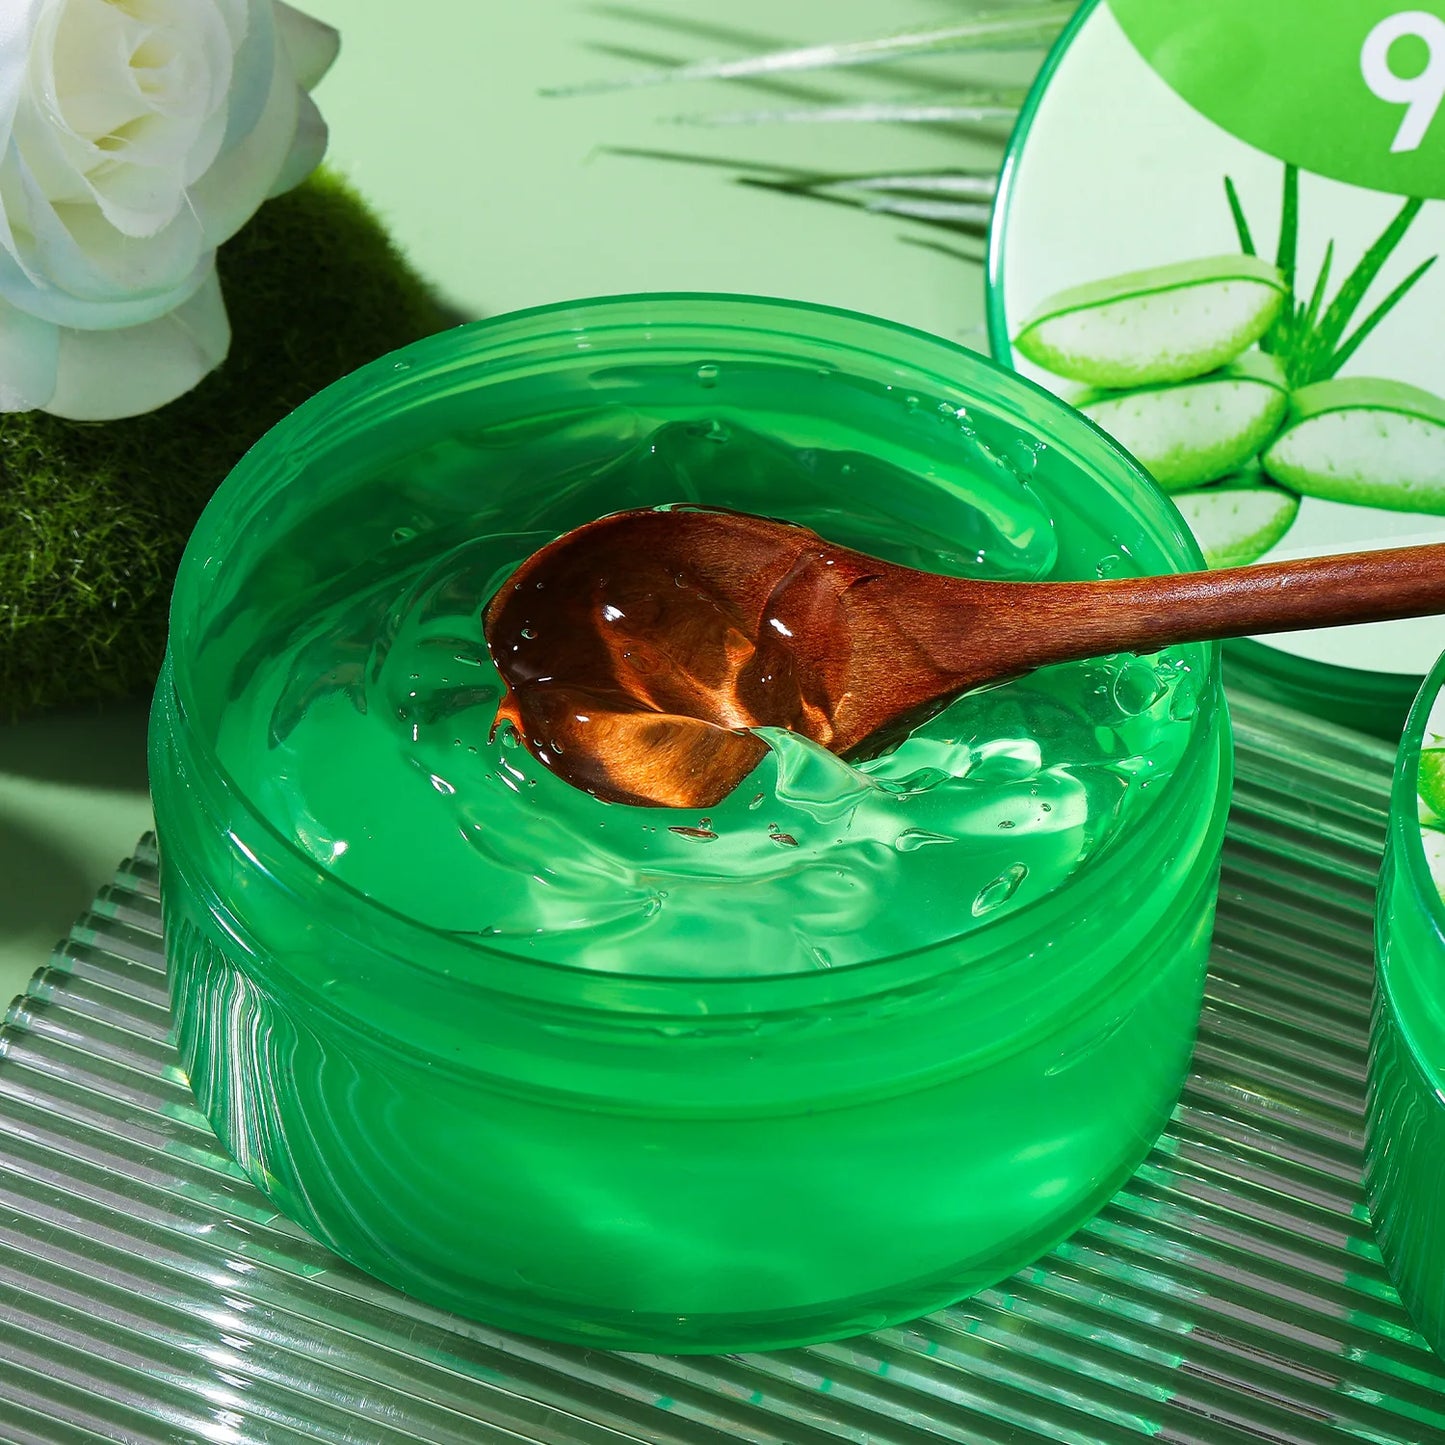 Face Care Tool Skin Care Products Face Moisturizing Aloe Vera Gel Cream Acne Treatment Face Cream Sun After Repair Sleeping Mask